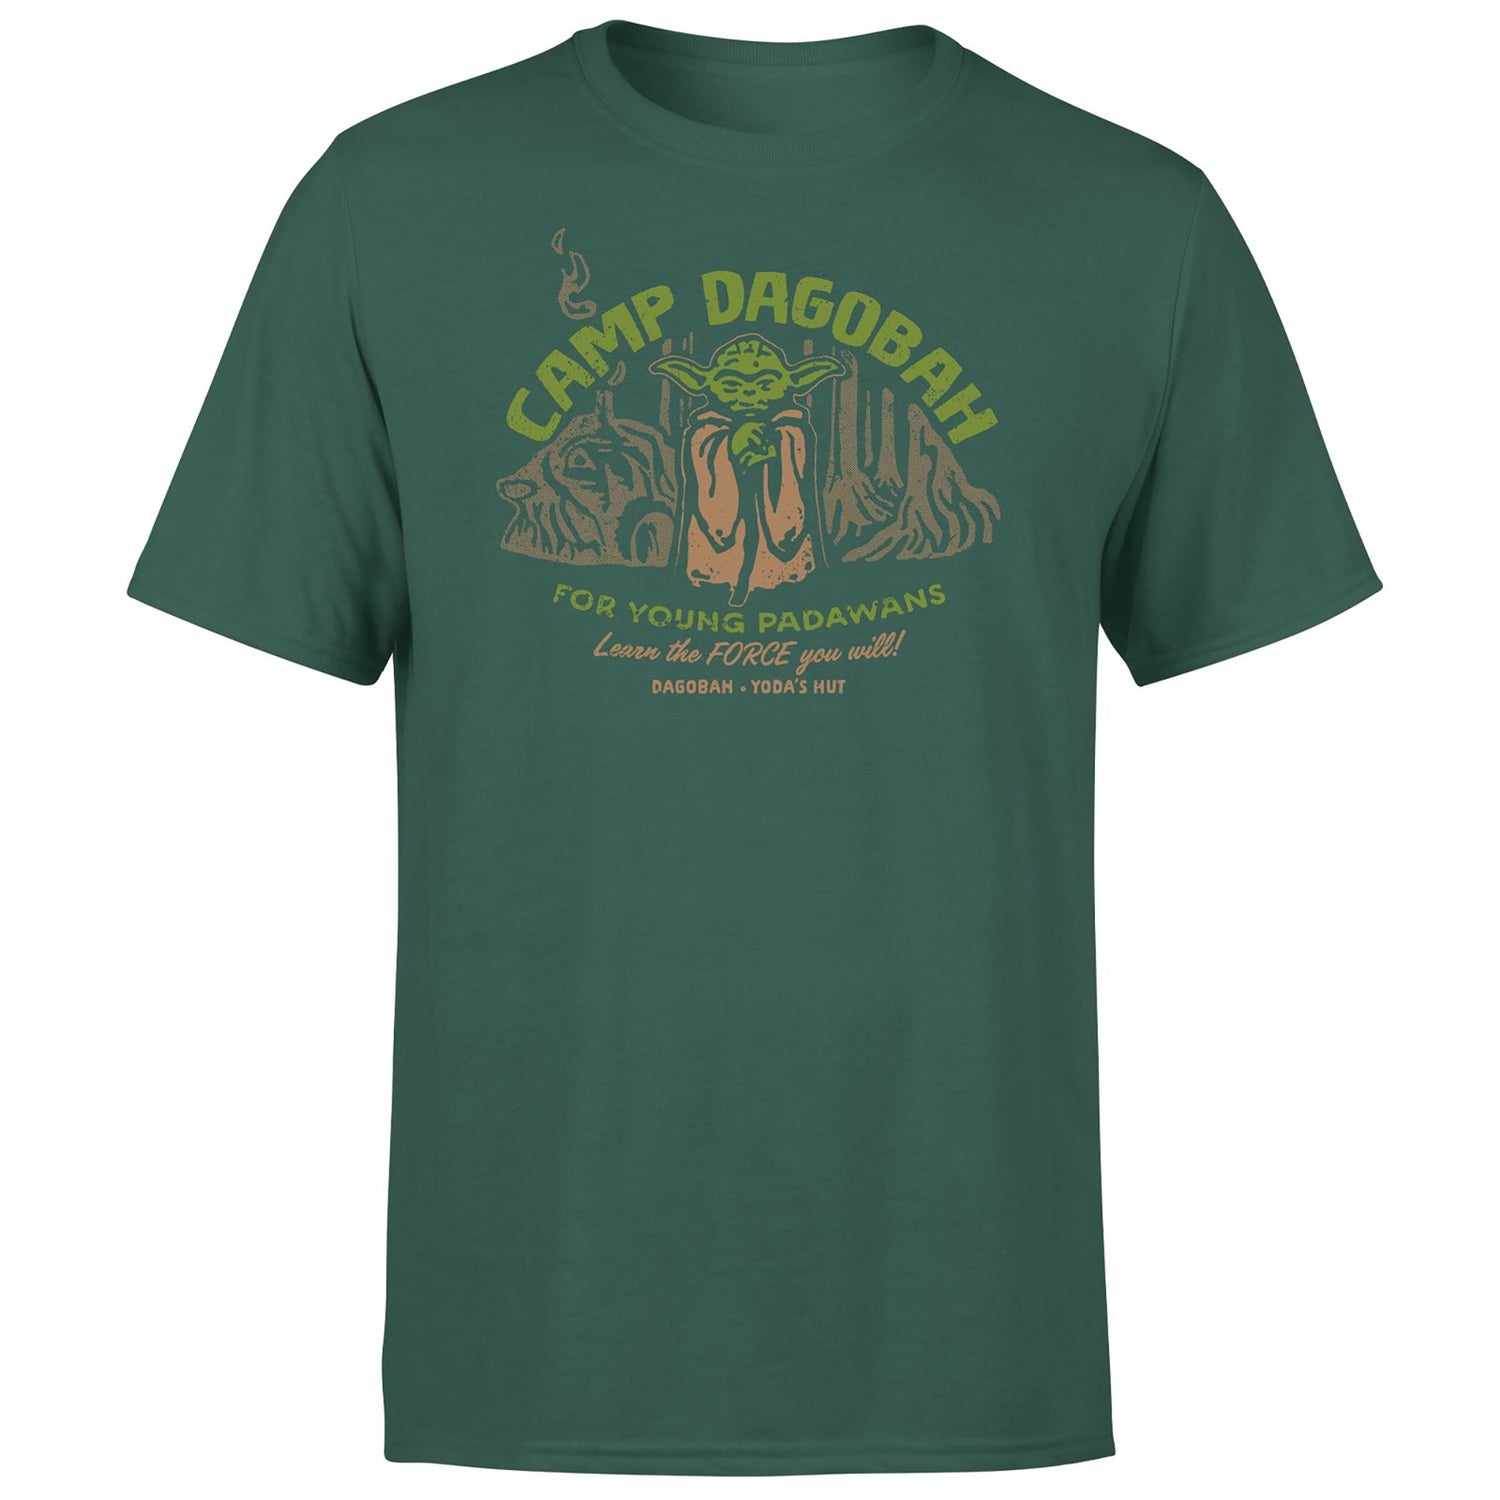 Star Wars Camp Dagobah Unisex T-Shirt - Green